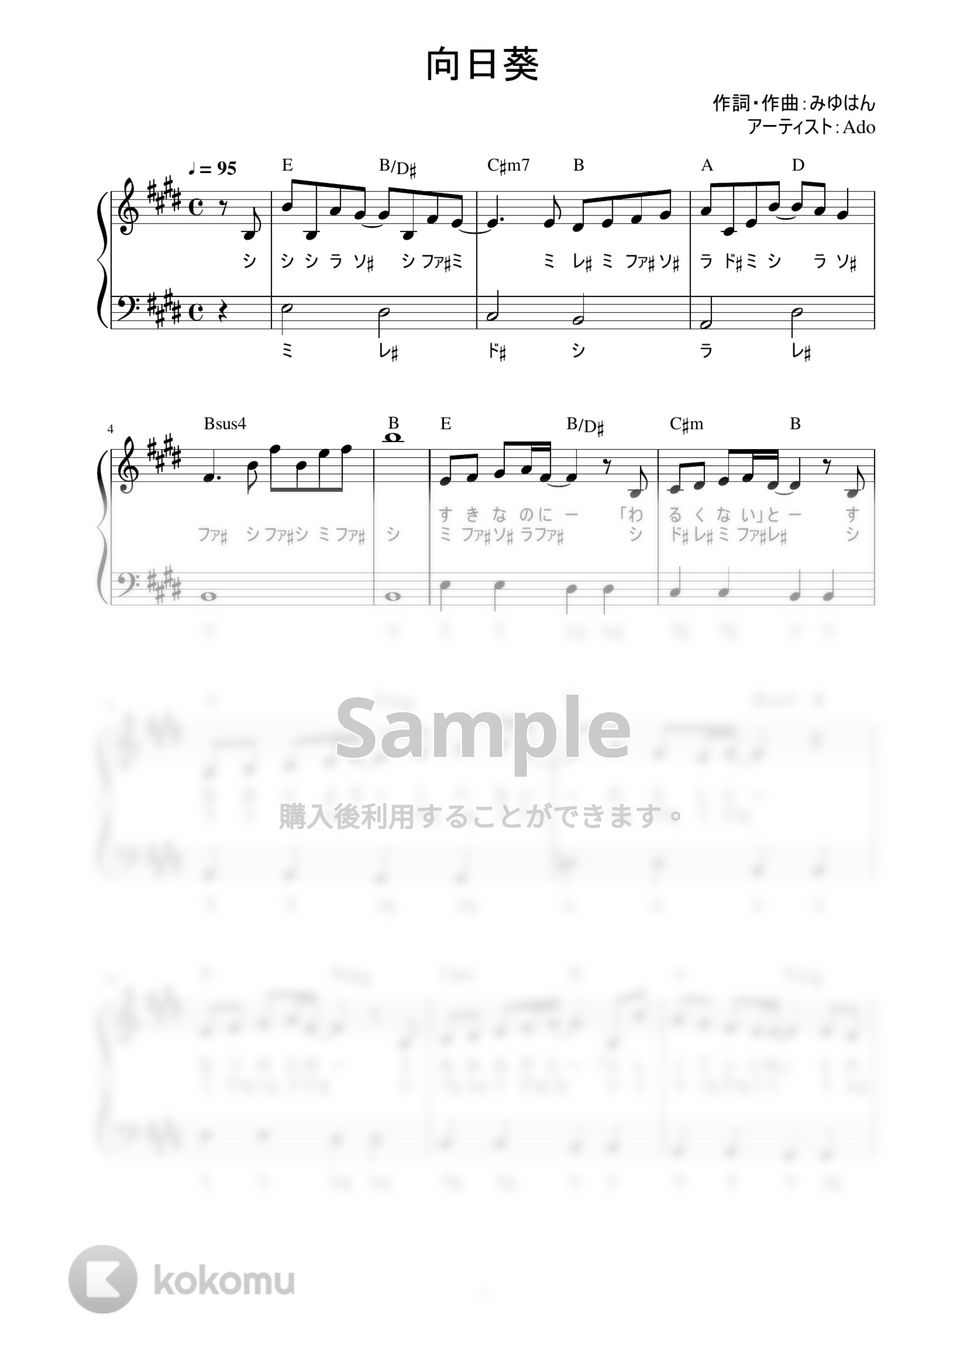 Ado - 向日葵 (かんたん / 歌詞付き / ドレミ付き / 初心者) by piano.tokyo